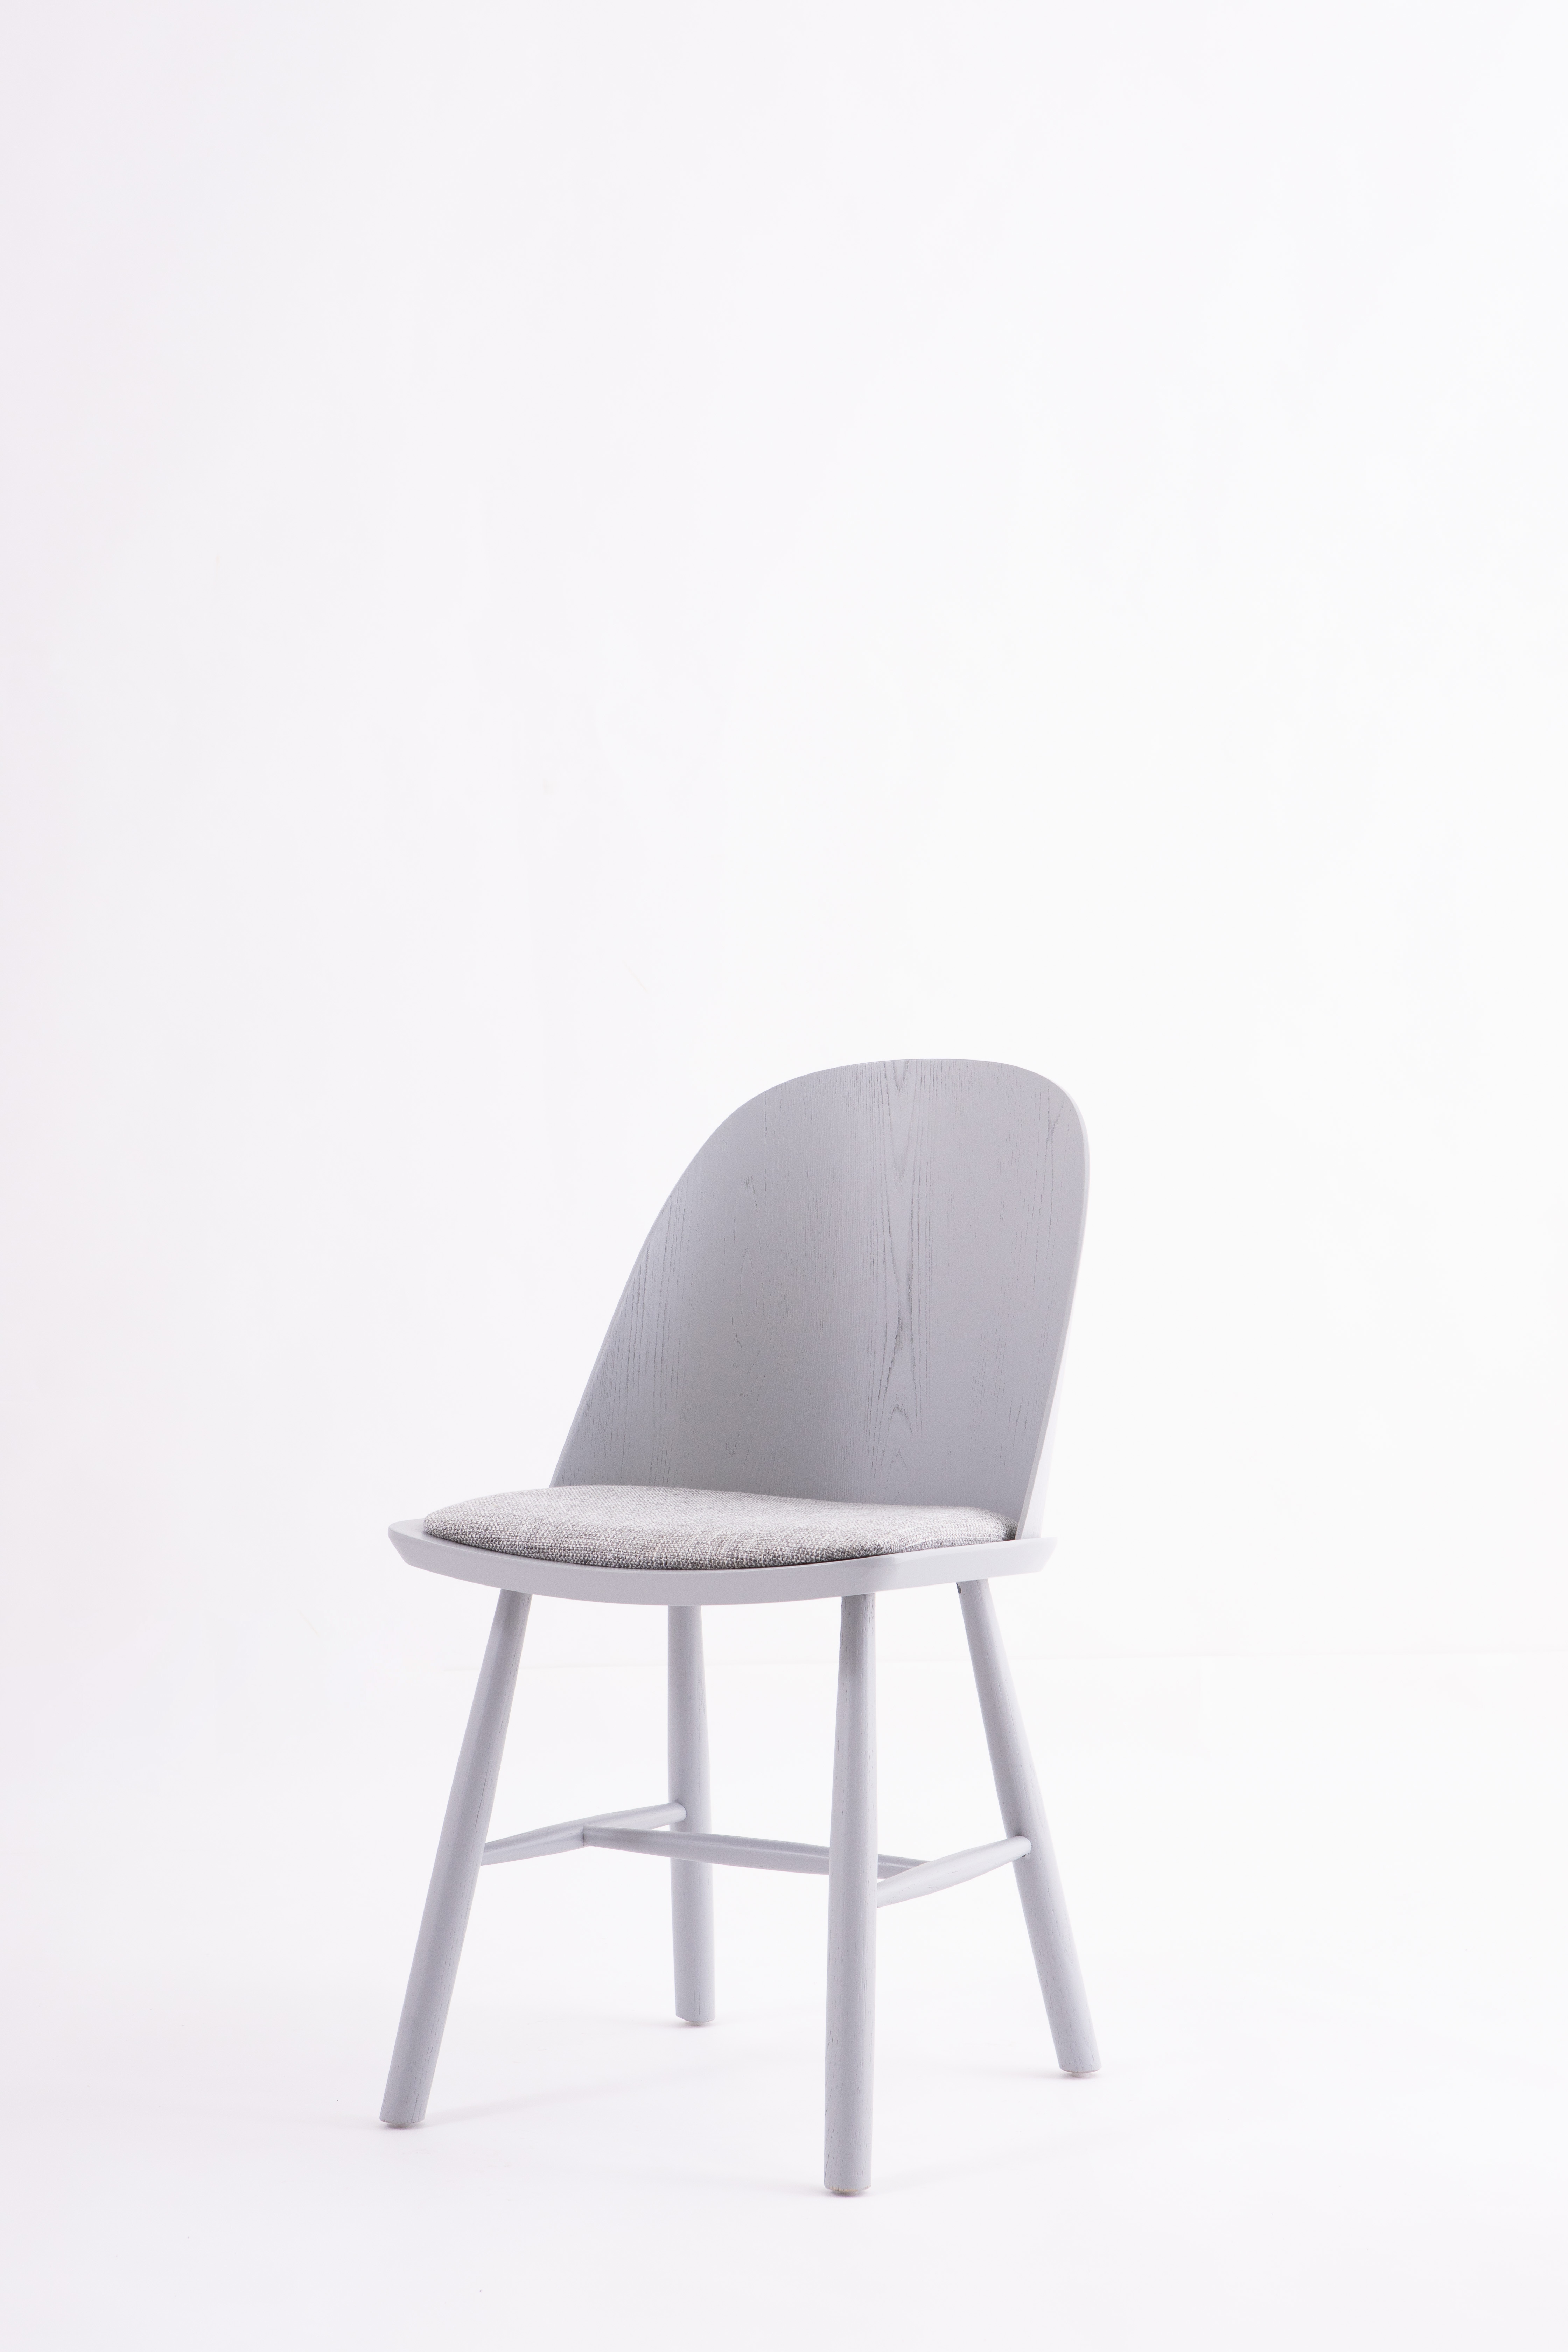 C17 Chair